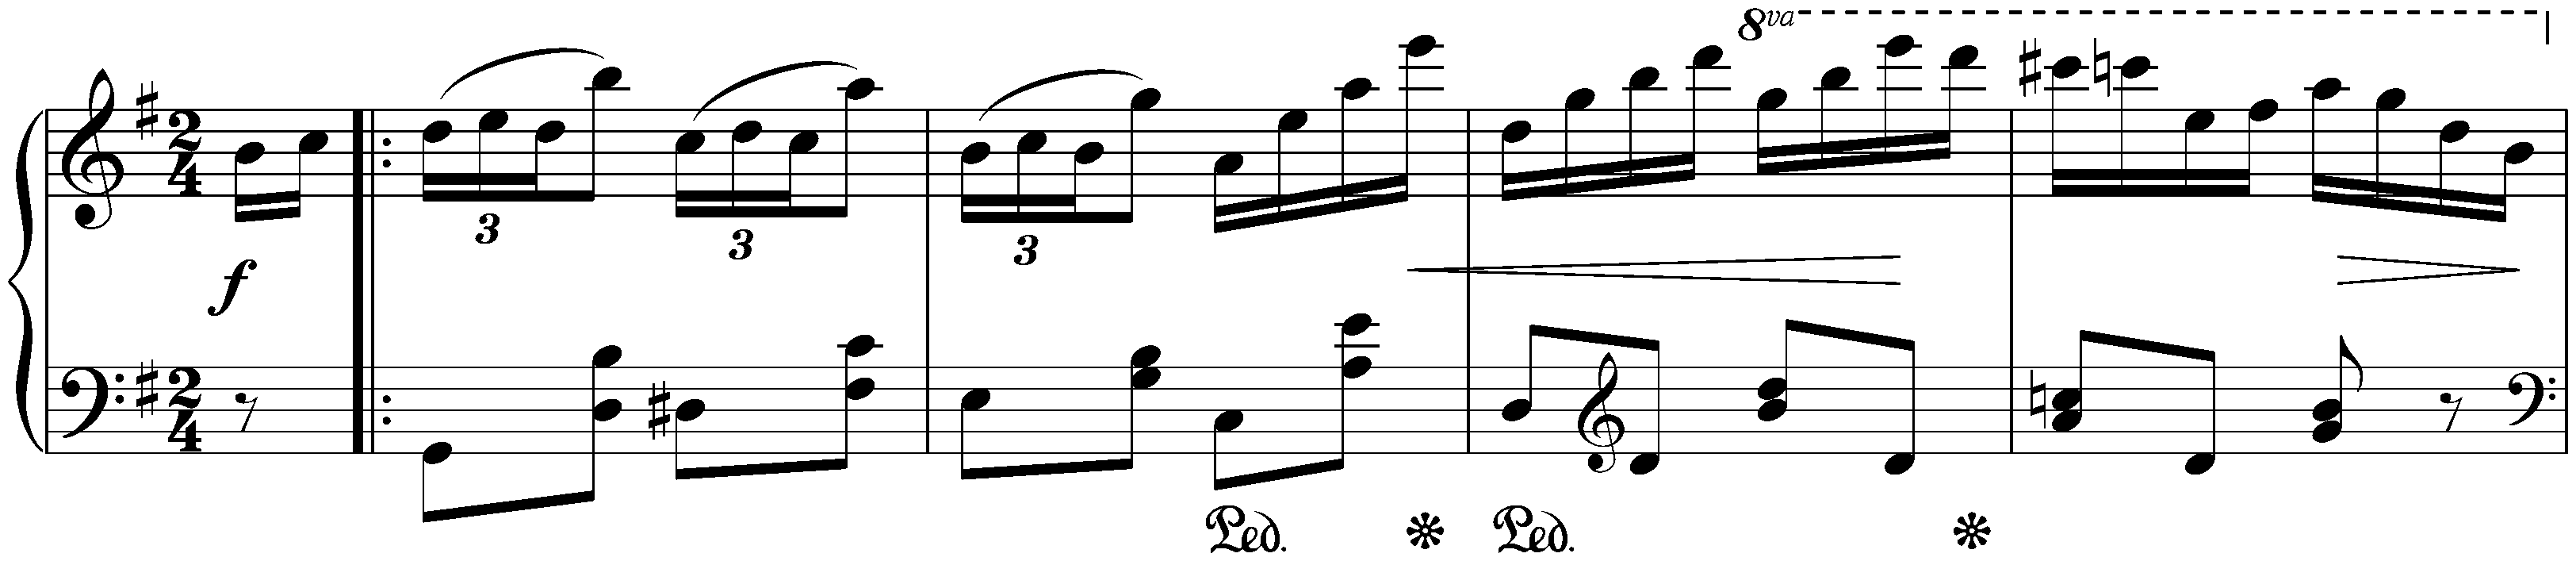 Three Écossaises, op. 72 no. 3; 2. G major